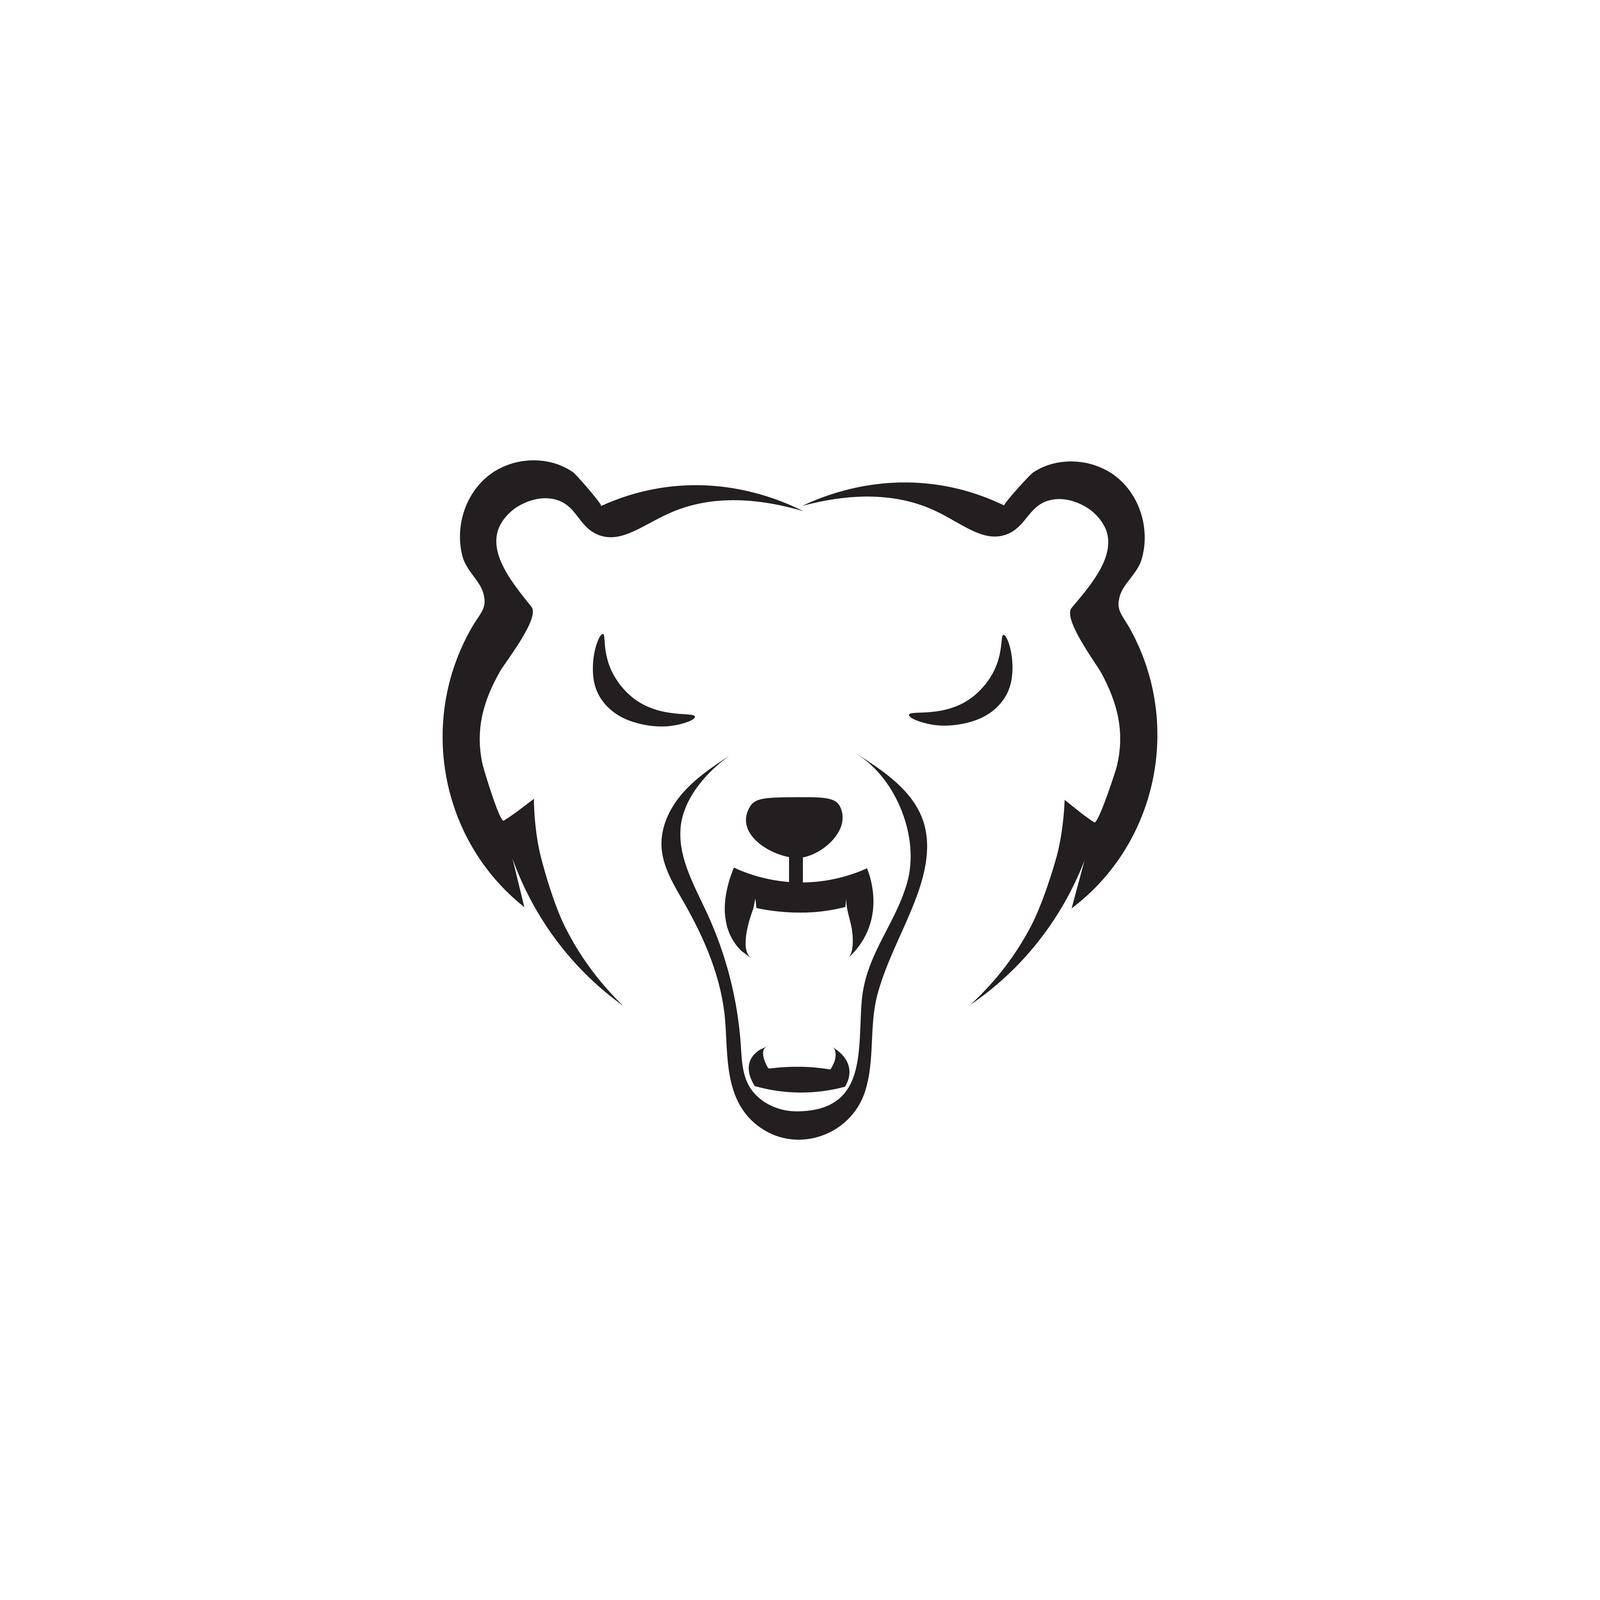 Bear icon logo free vector by ABD03